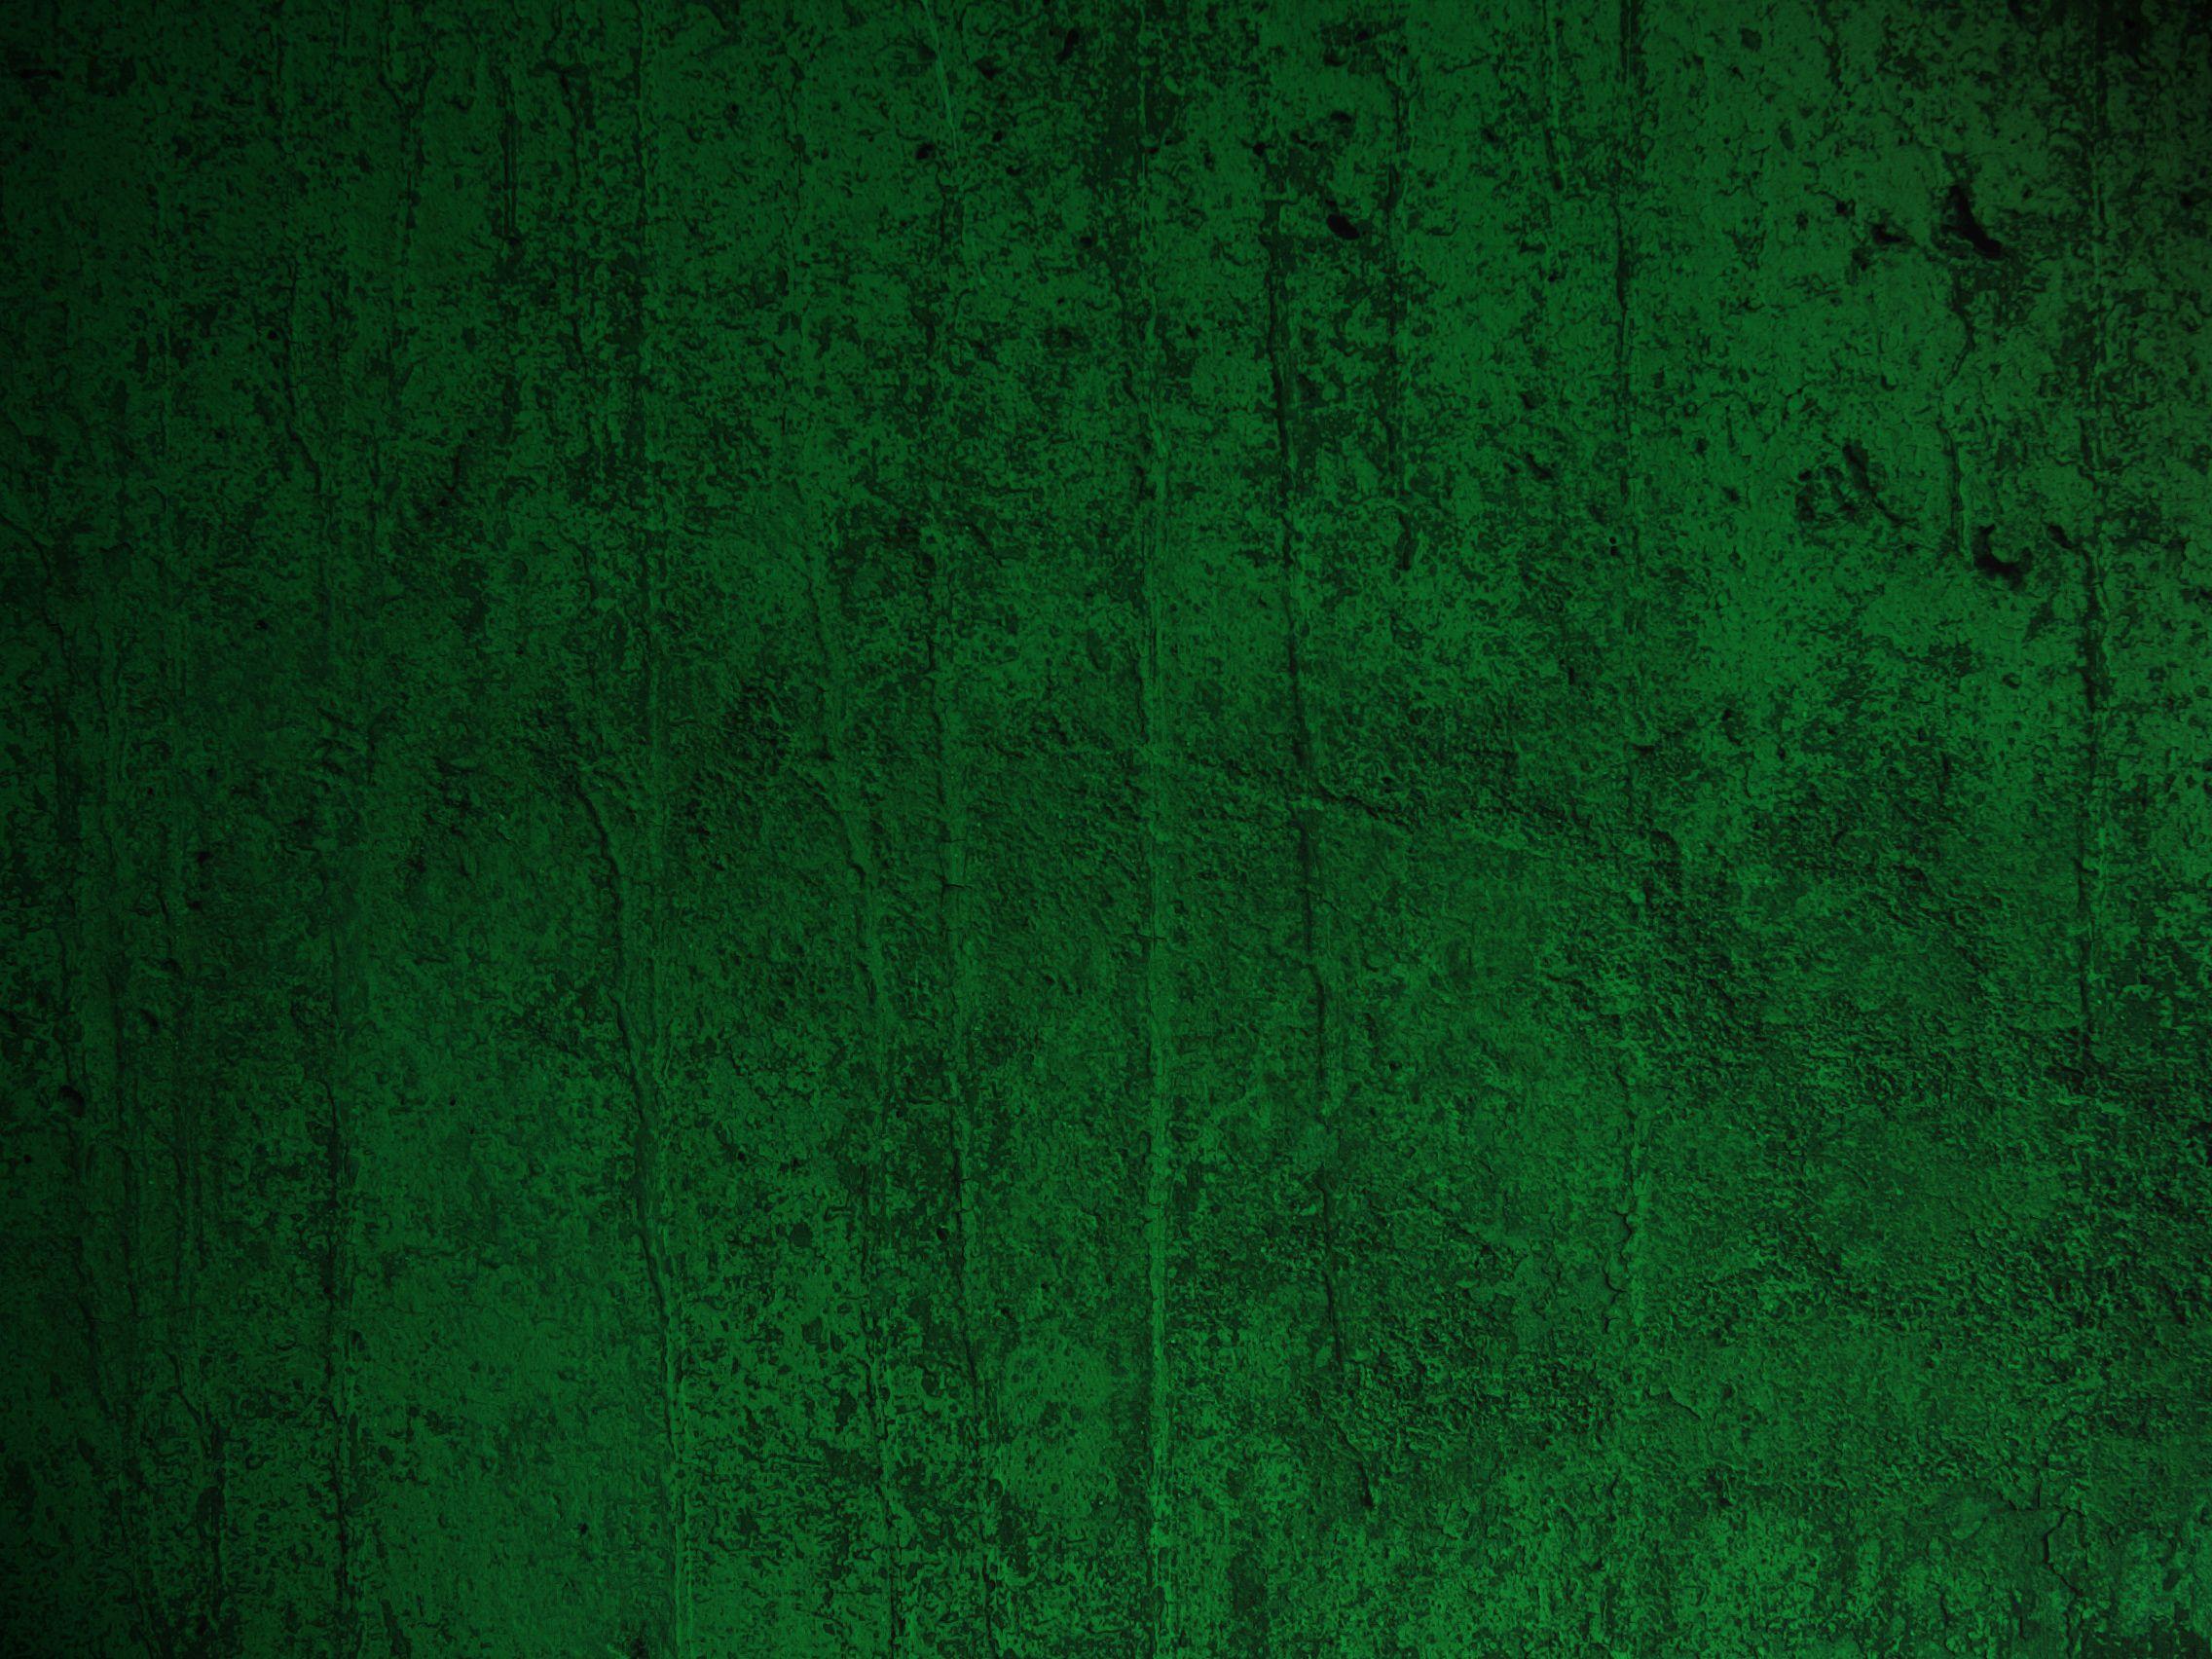 Get attractive Textured green background in high resolution